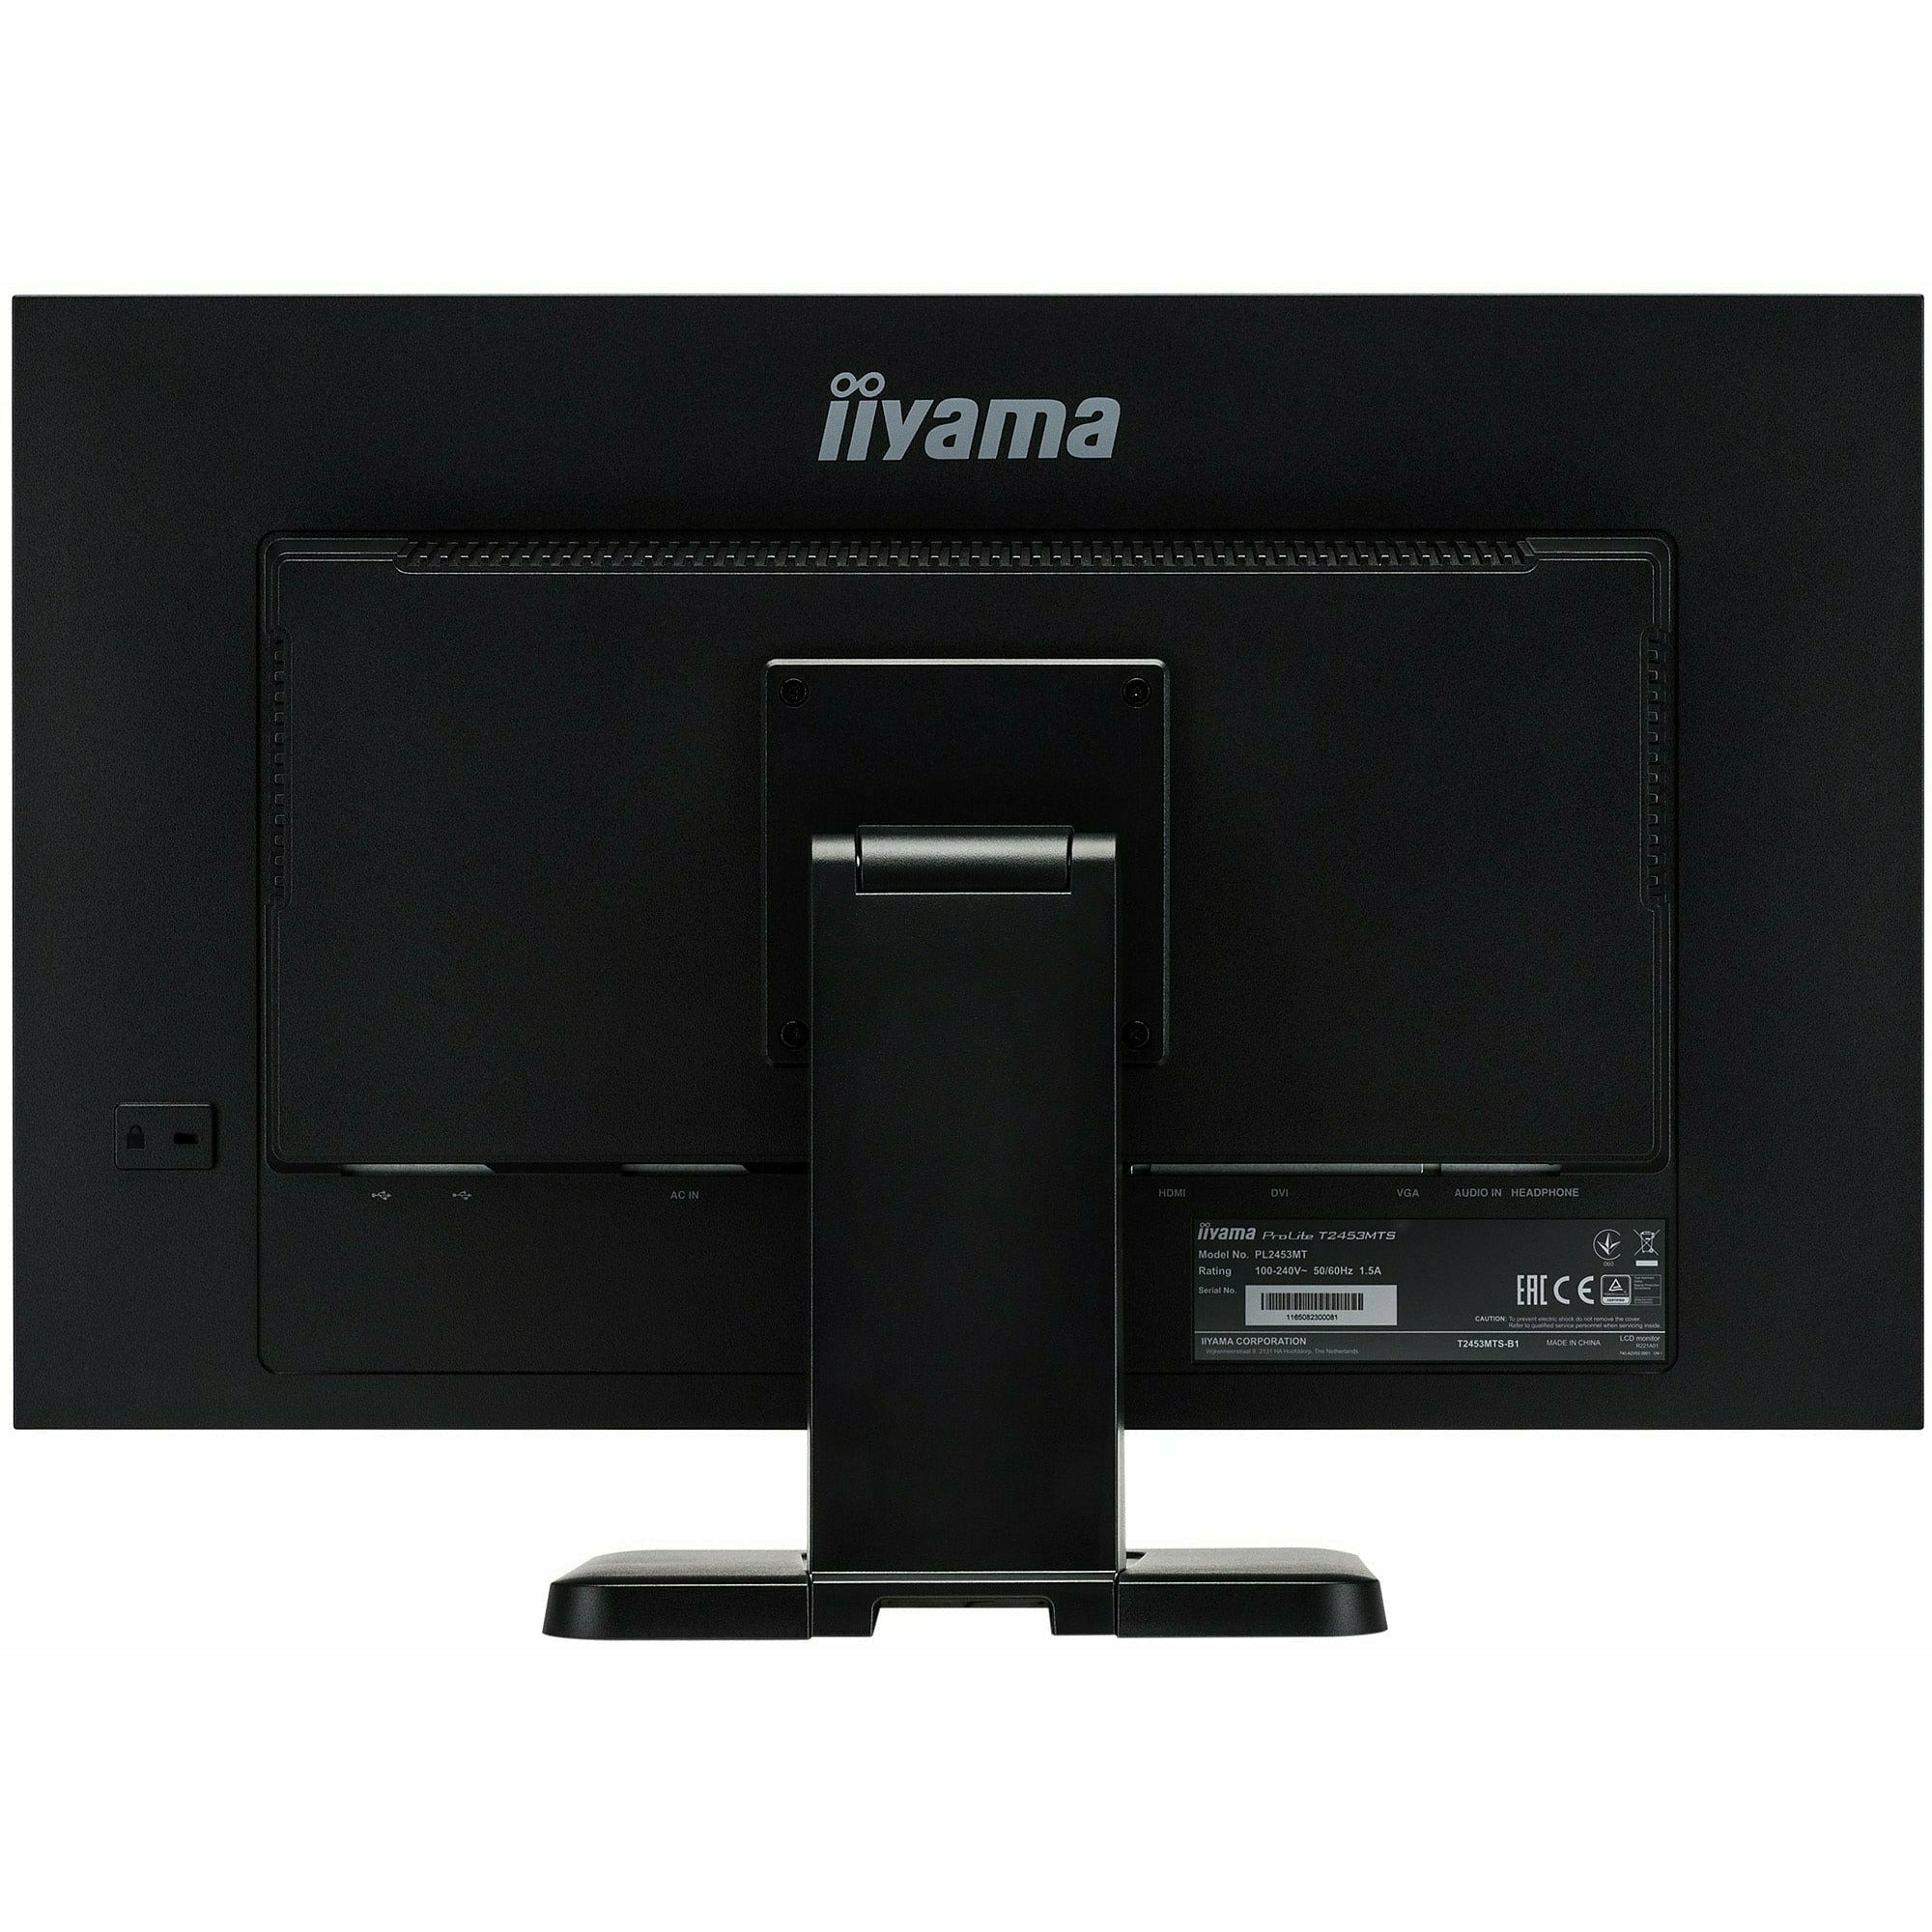 iiyama ProLite T2453MTS-B1 24" Optical 2pt Touch Screen